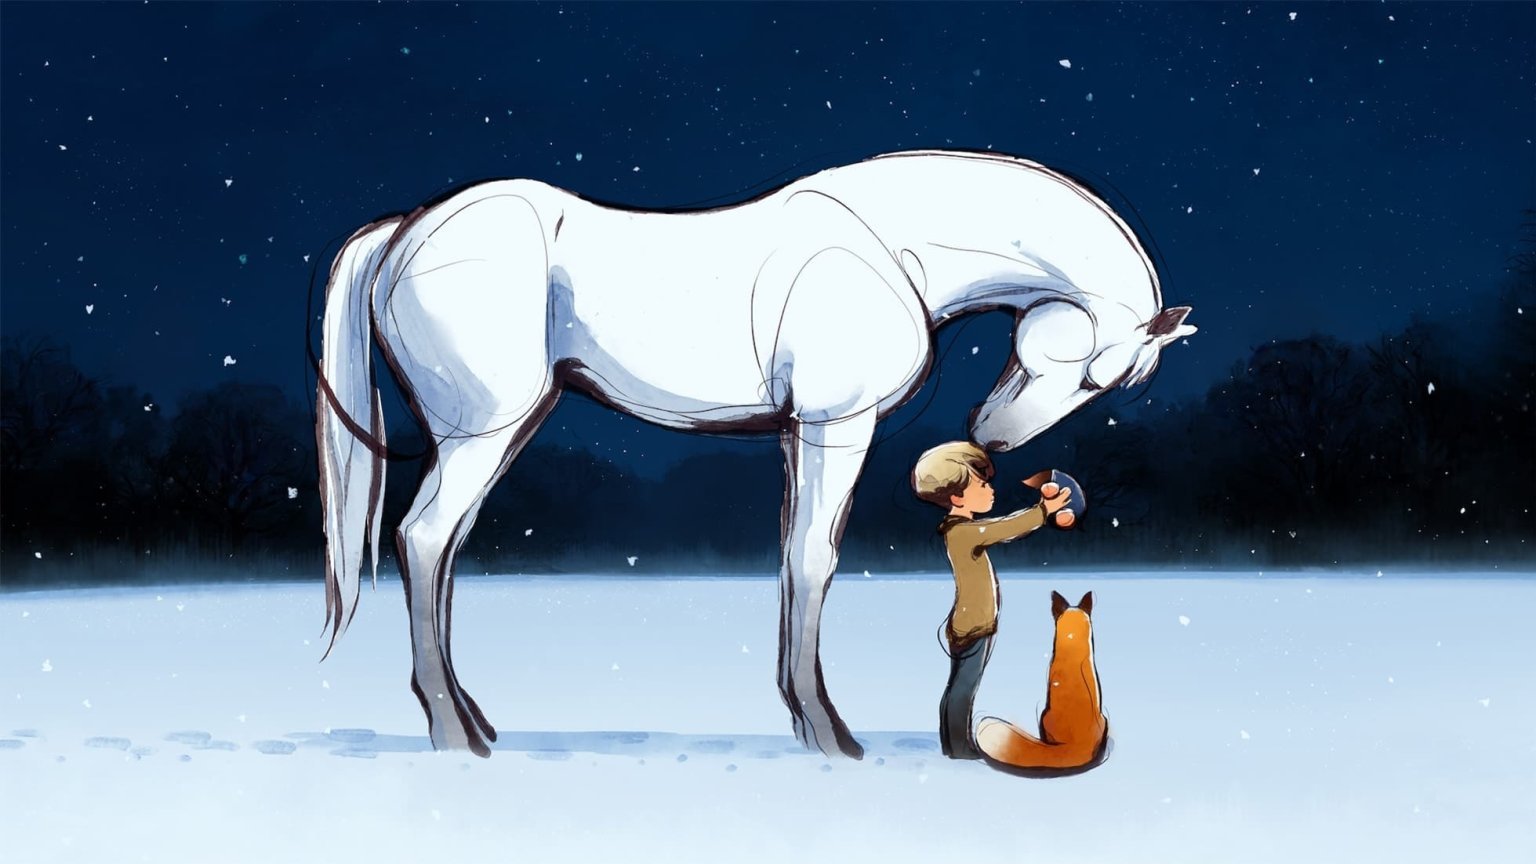 Bestseller 'The Boy, the Mole, the Fox and the Horse' wordt verfilmd, trailer nu te zien